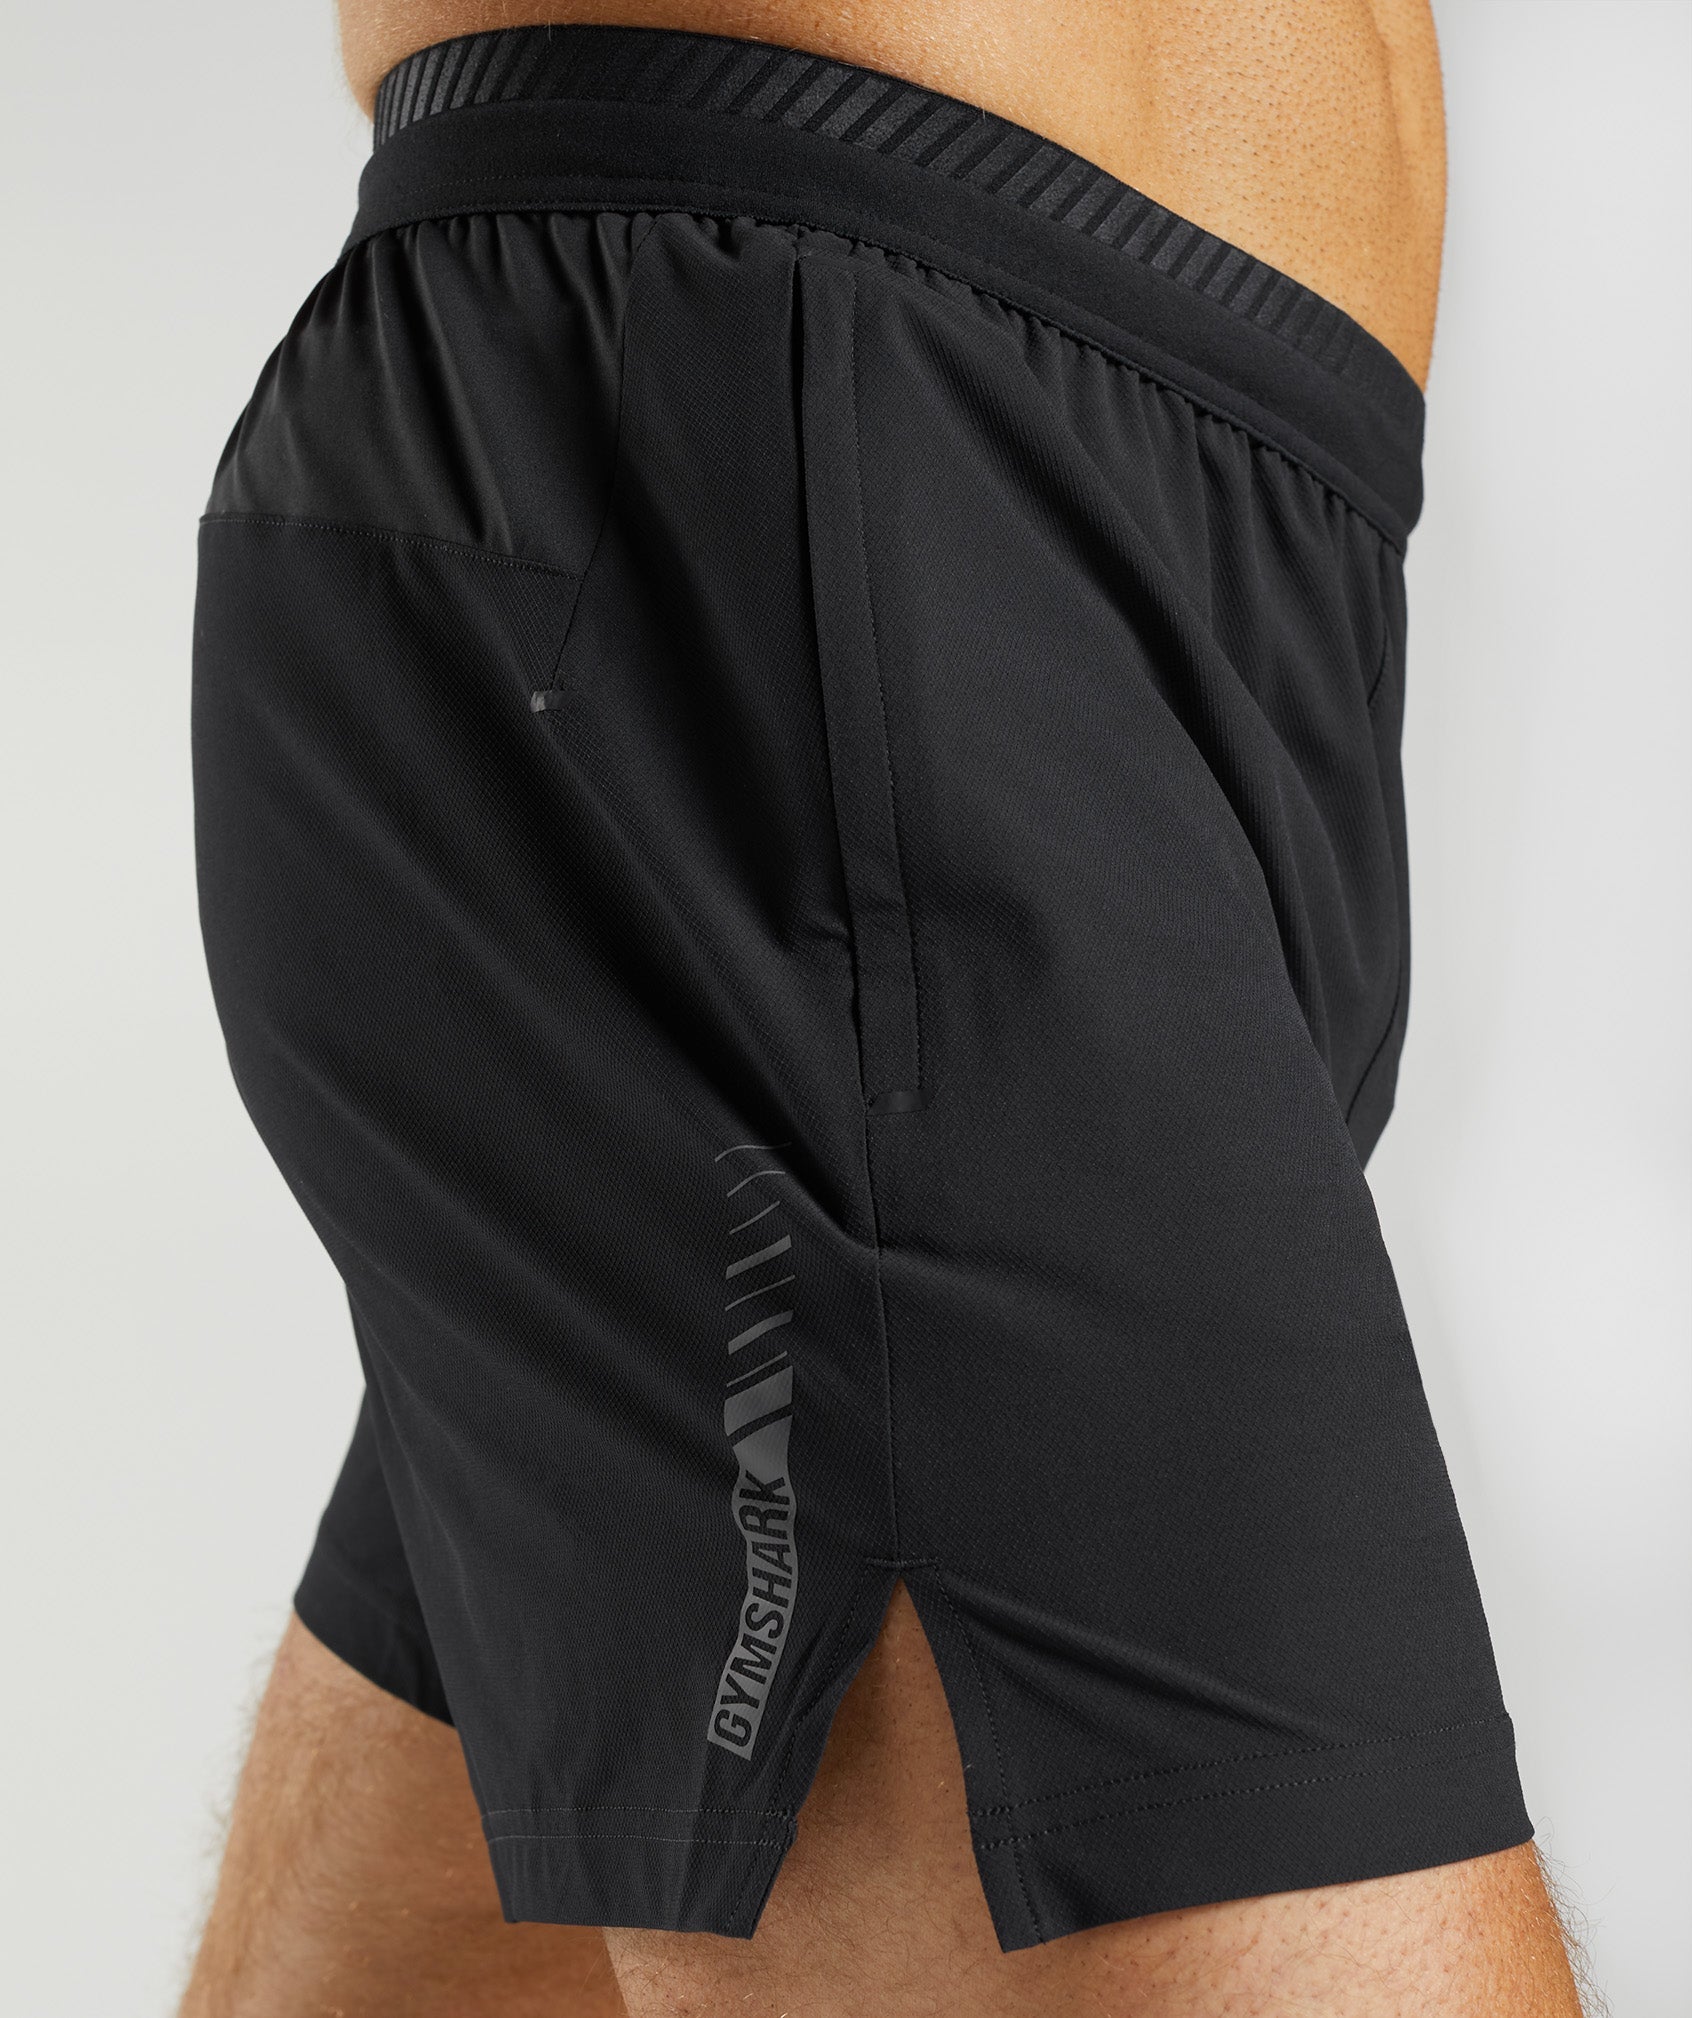 Apex 5" Hybrid Shorts in Black - view 6